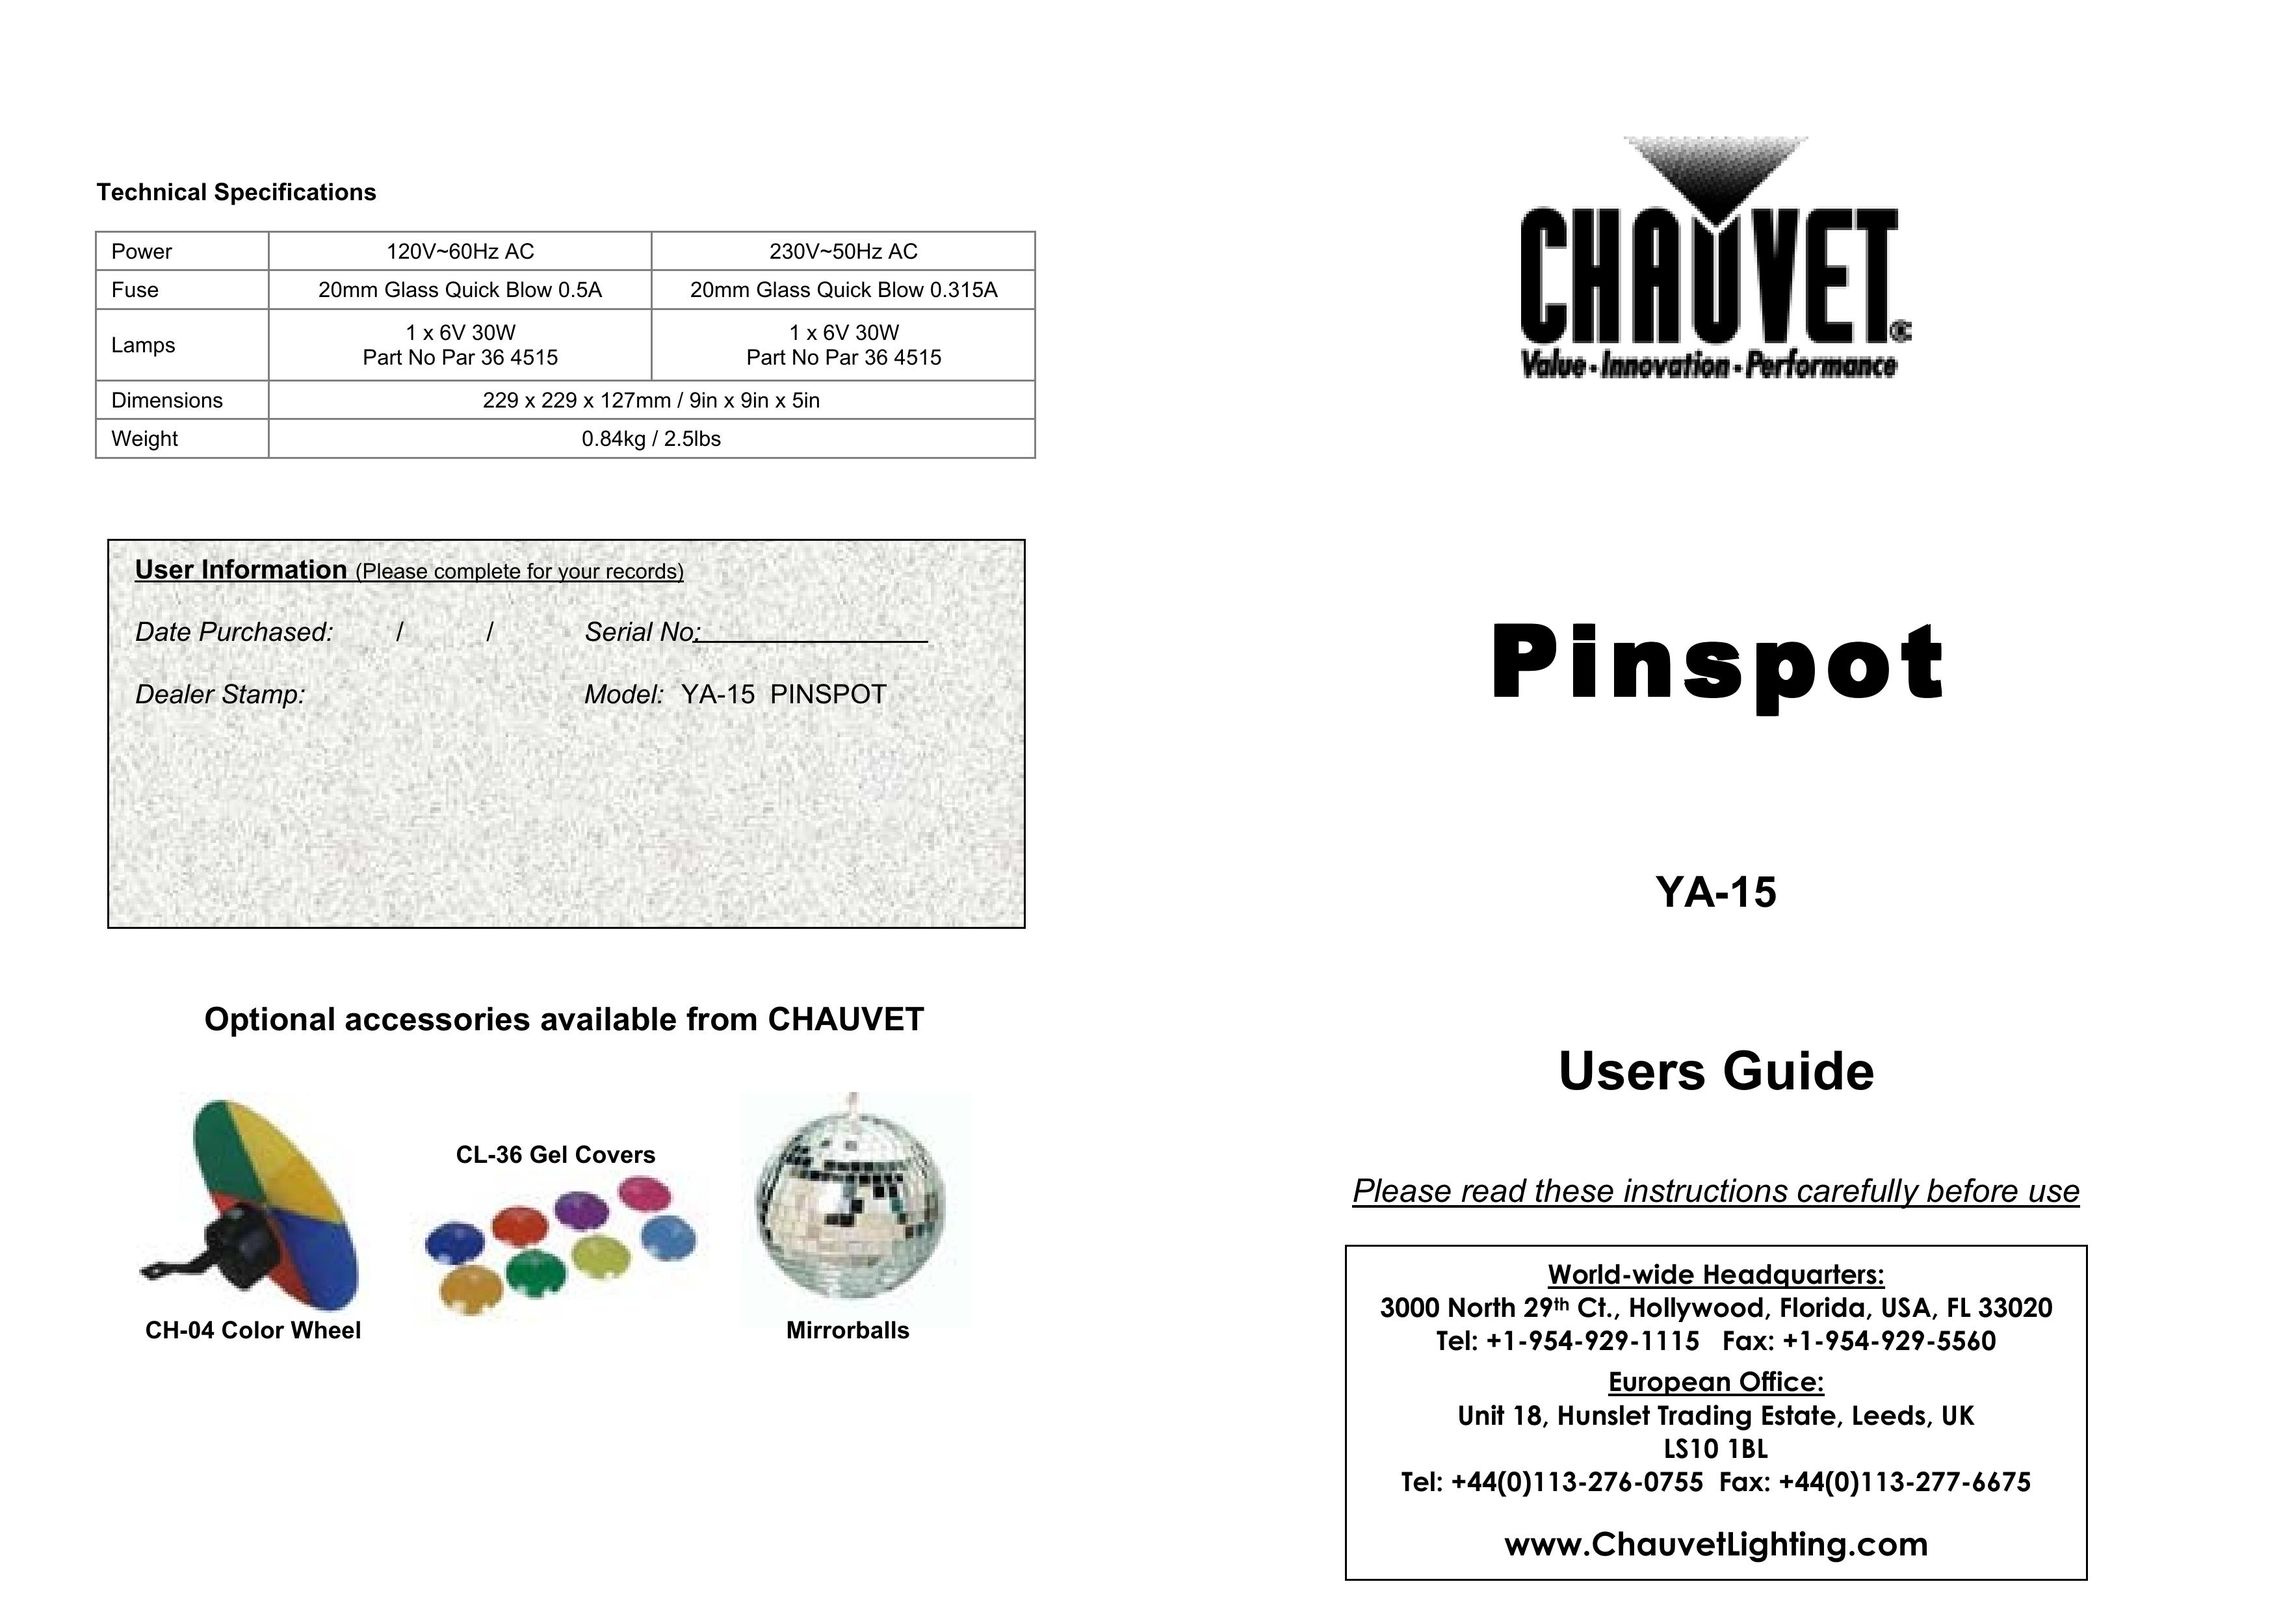 Chauvet YA-15 Indoor Furnishings User Manual